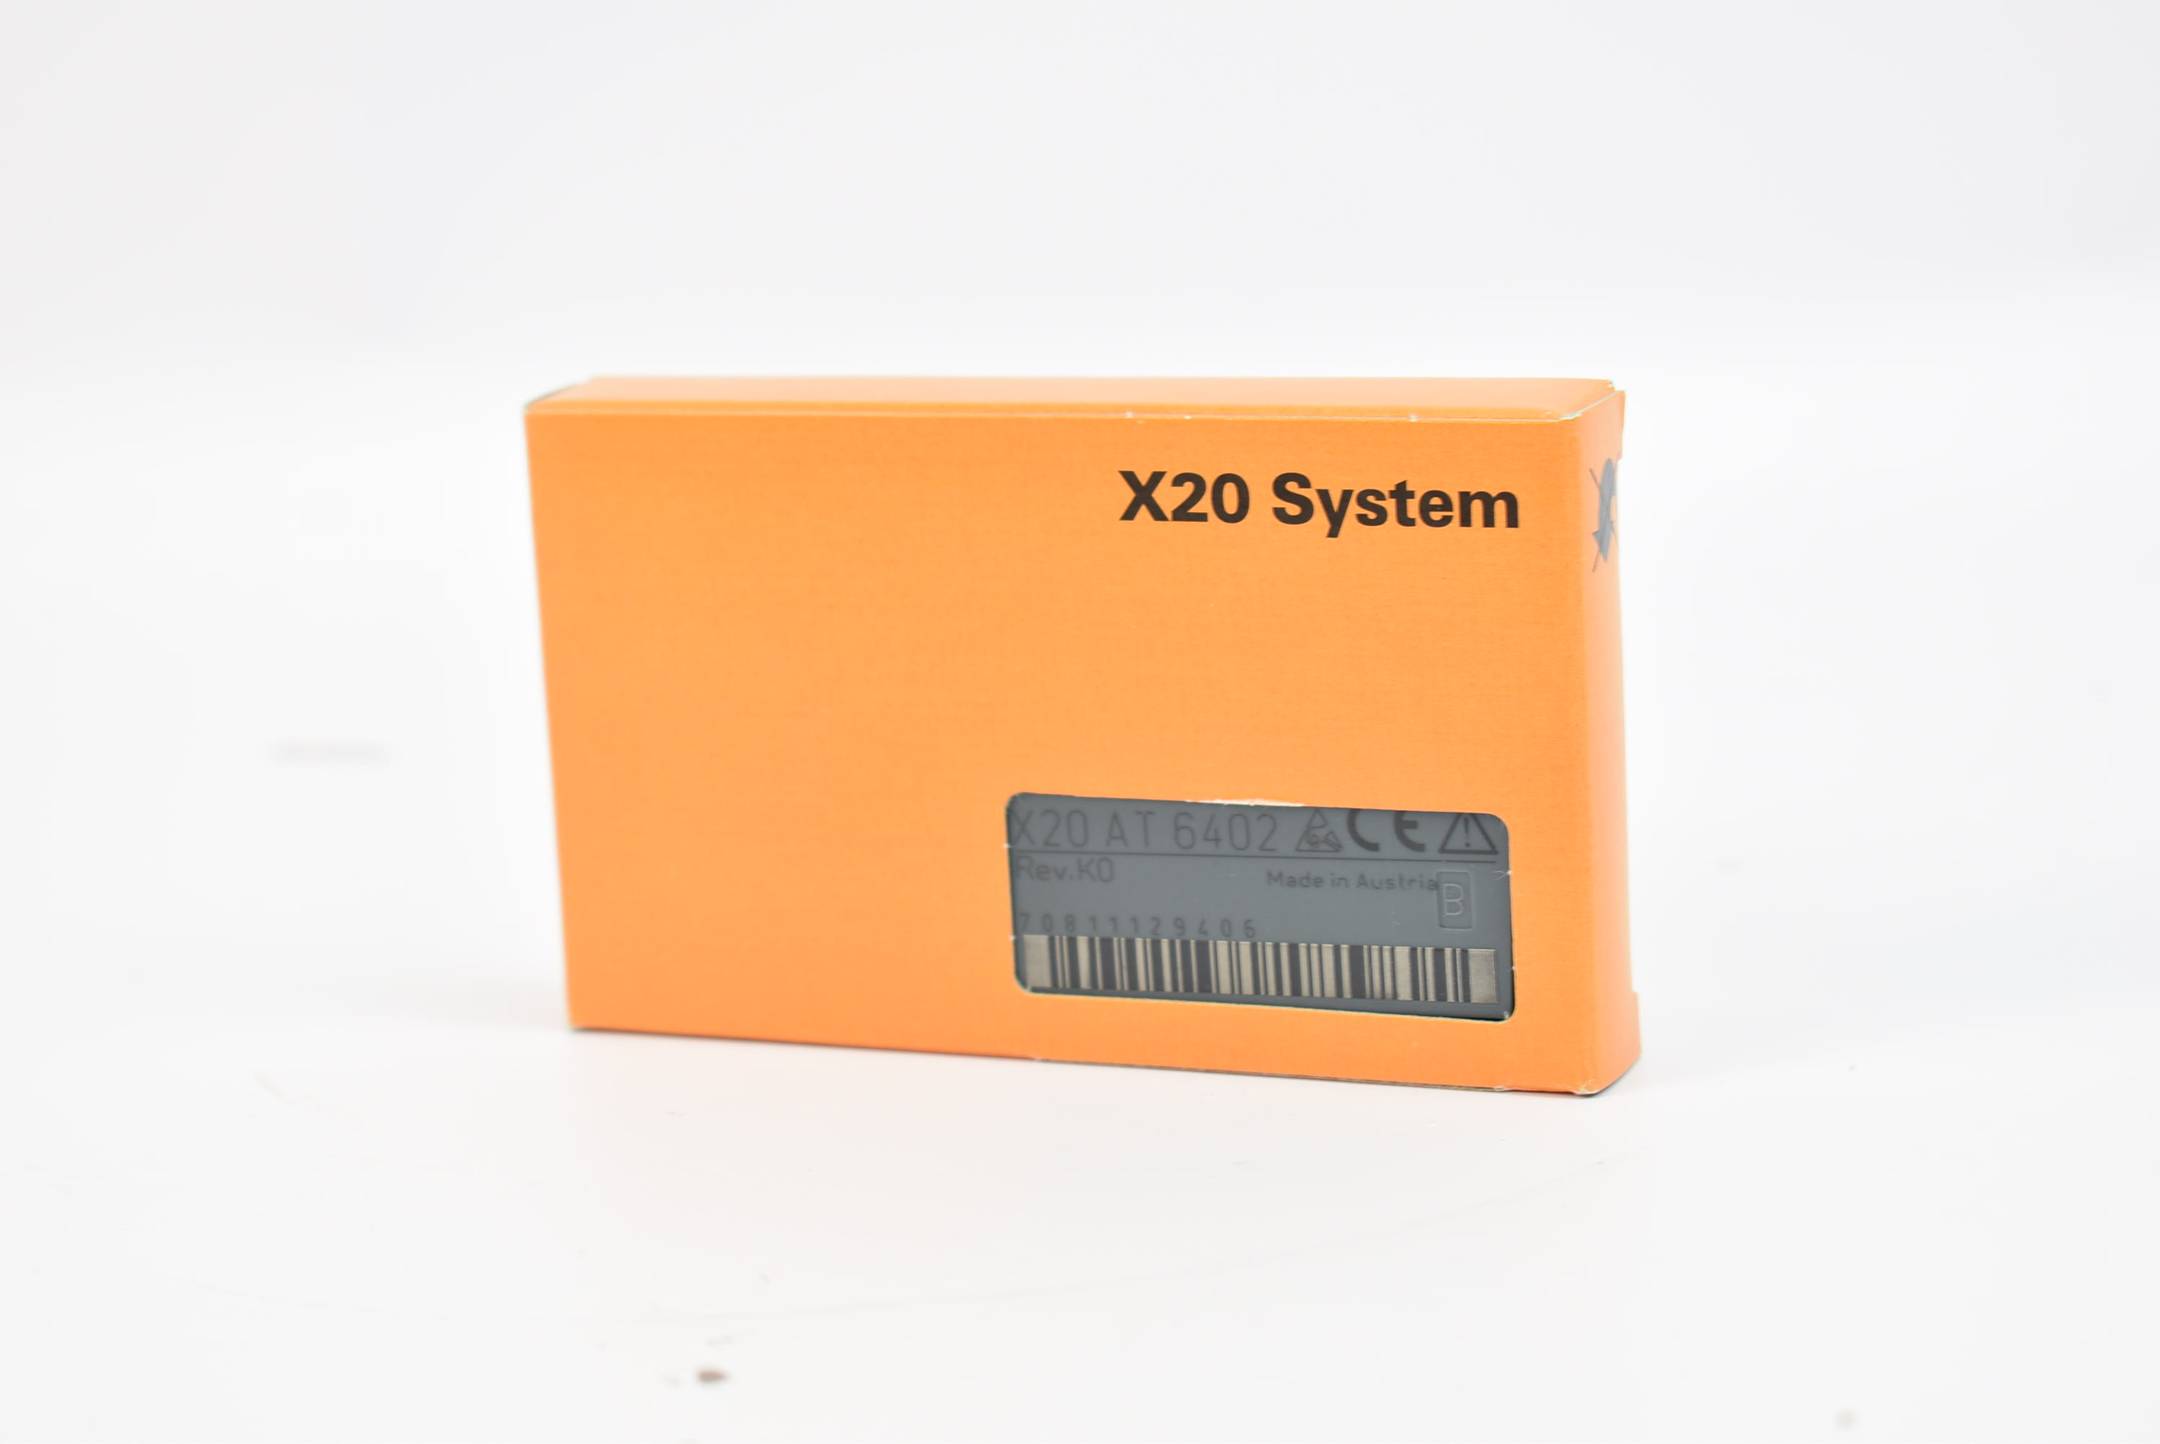 B&R automation Temperatur-Eingangsmodul X20 AT 6402 ( X20AT6402 ) Rev. K0